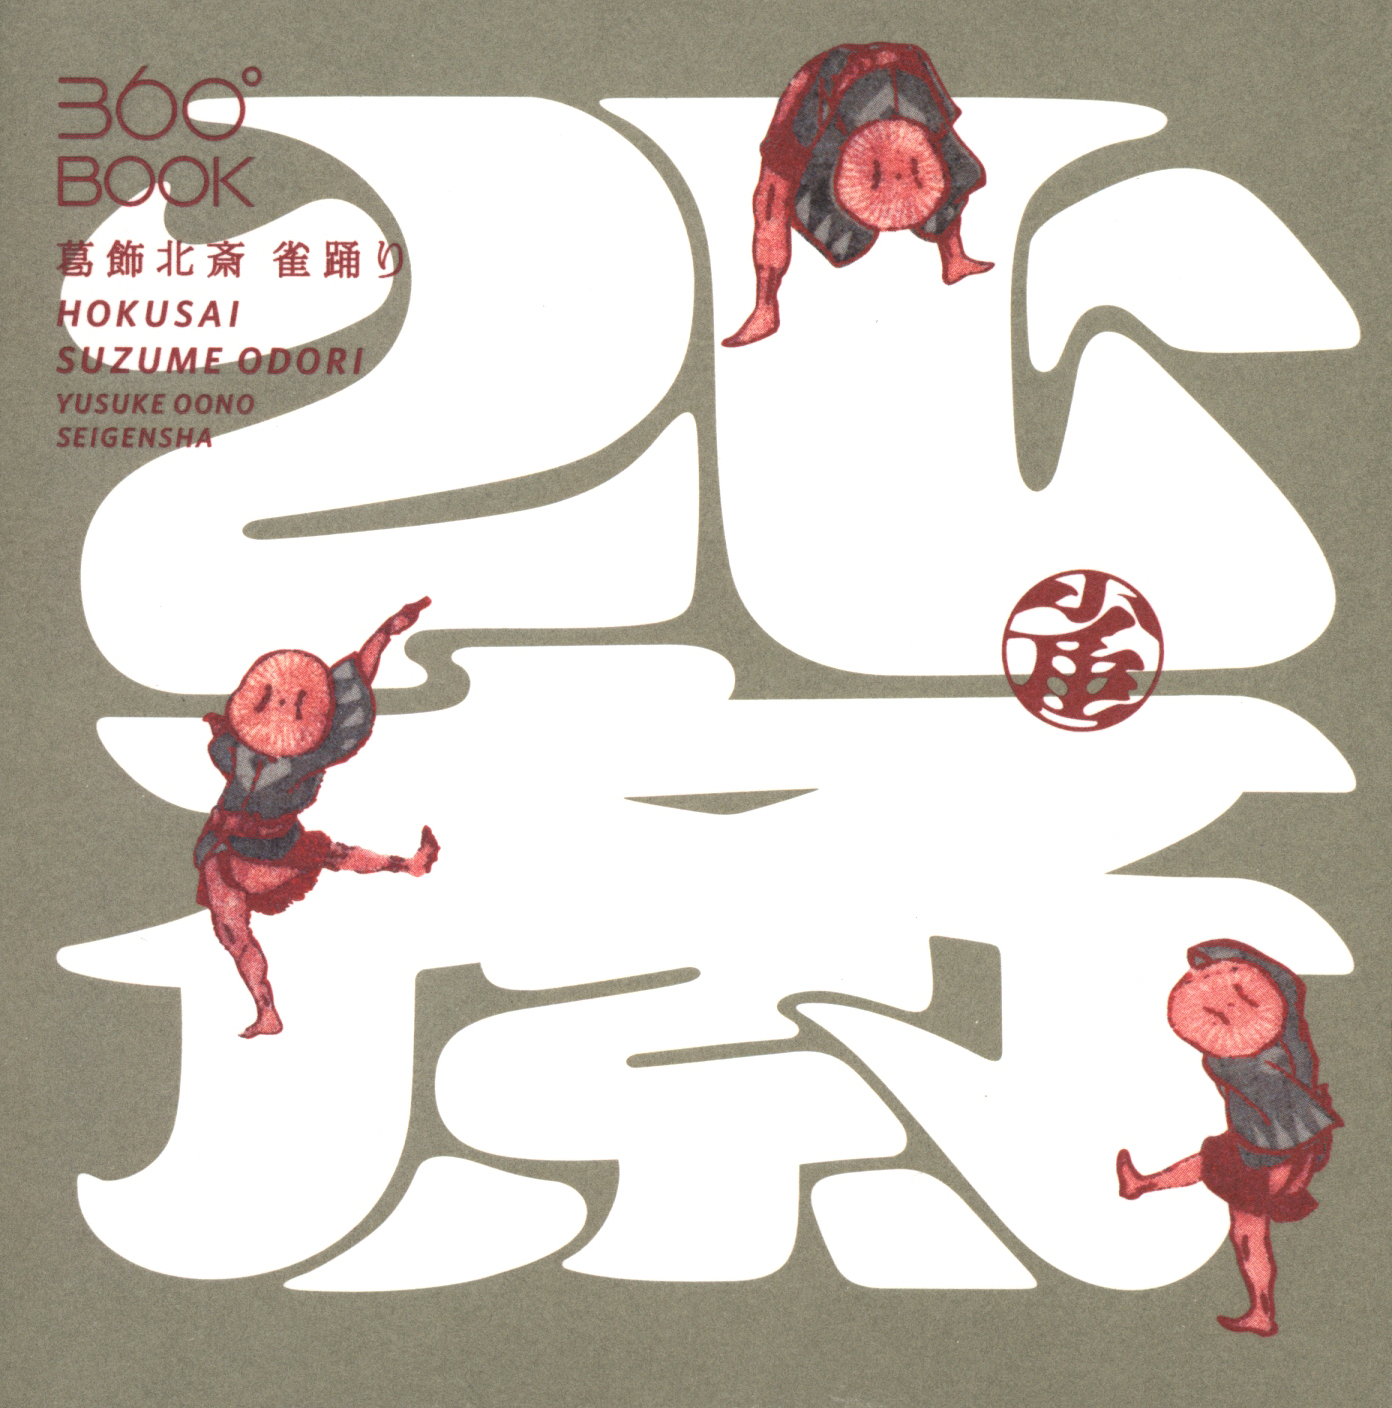 Hokusai Sparrow Dance 360 Book - Yusuke Oono